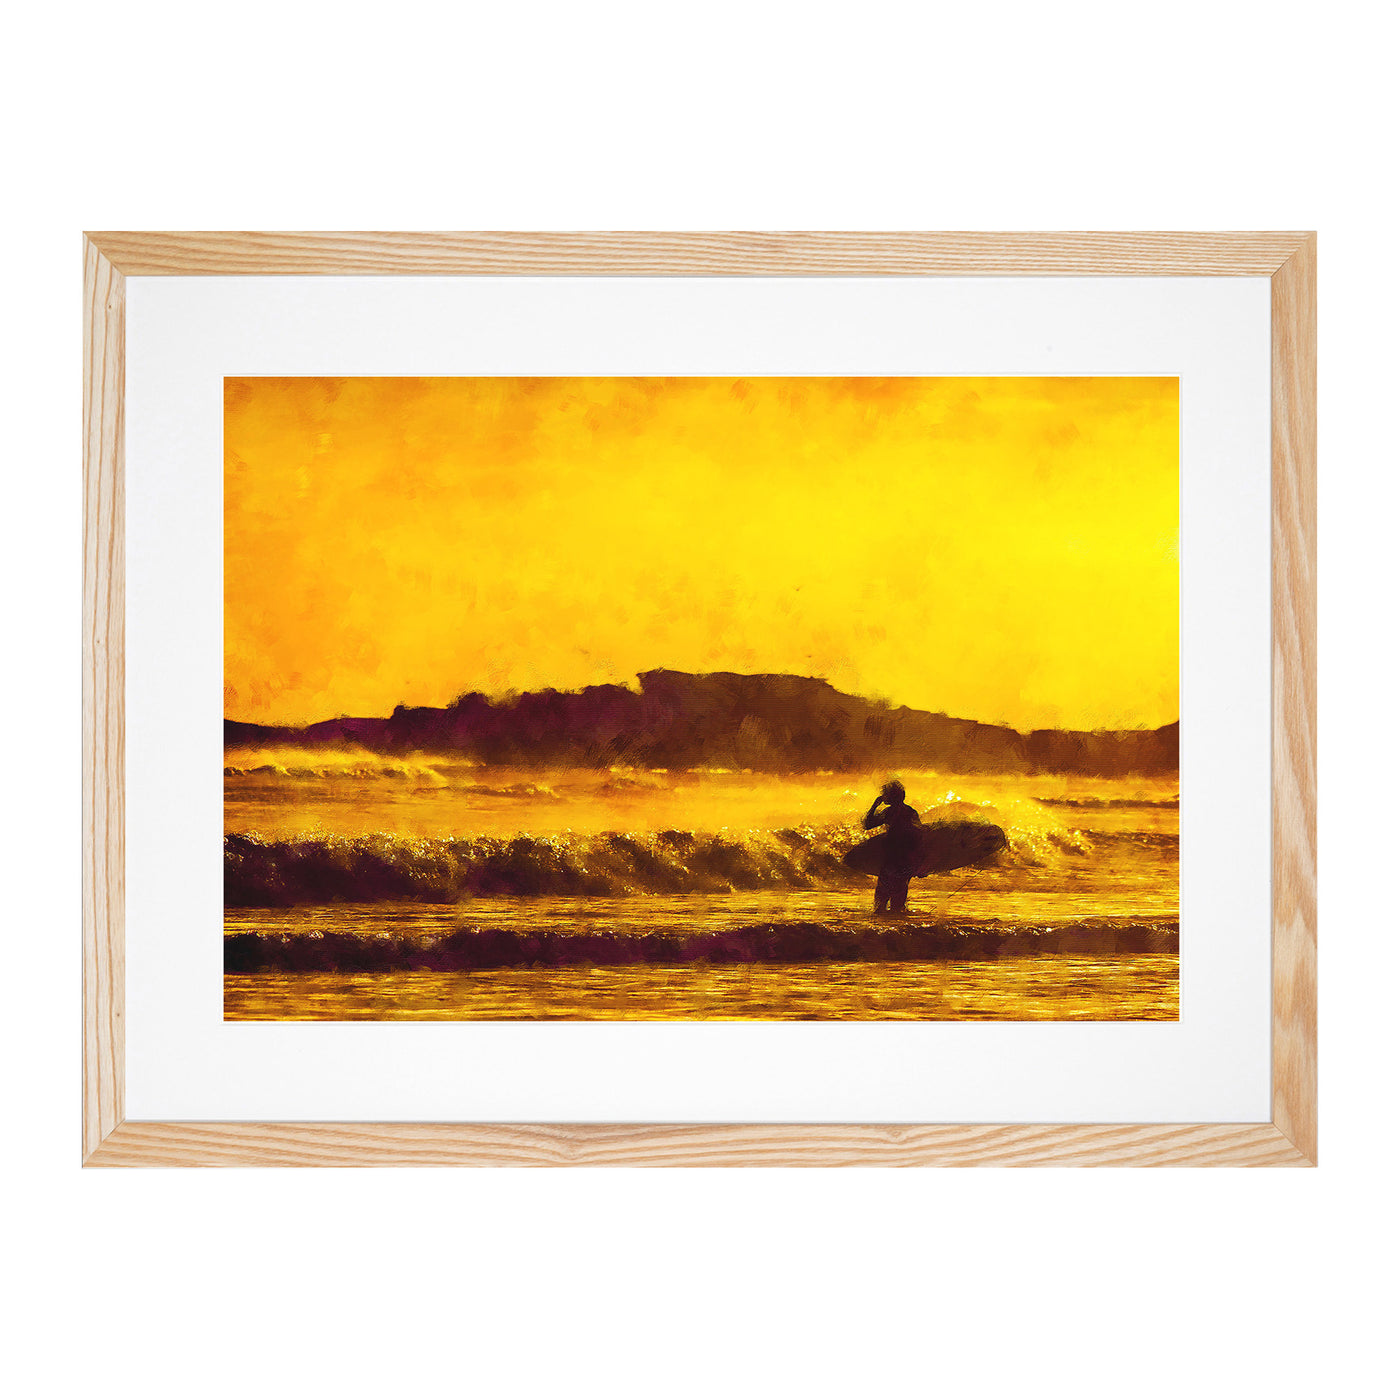 Man Surfing At Sunset